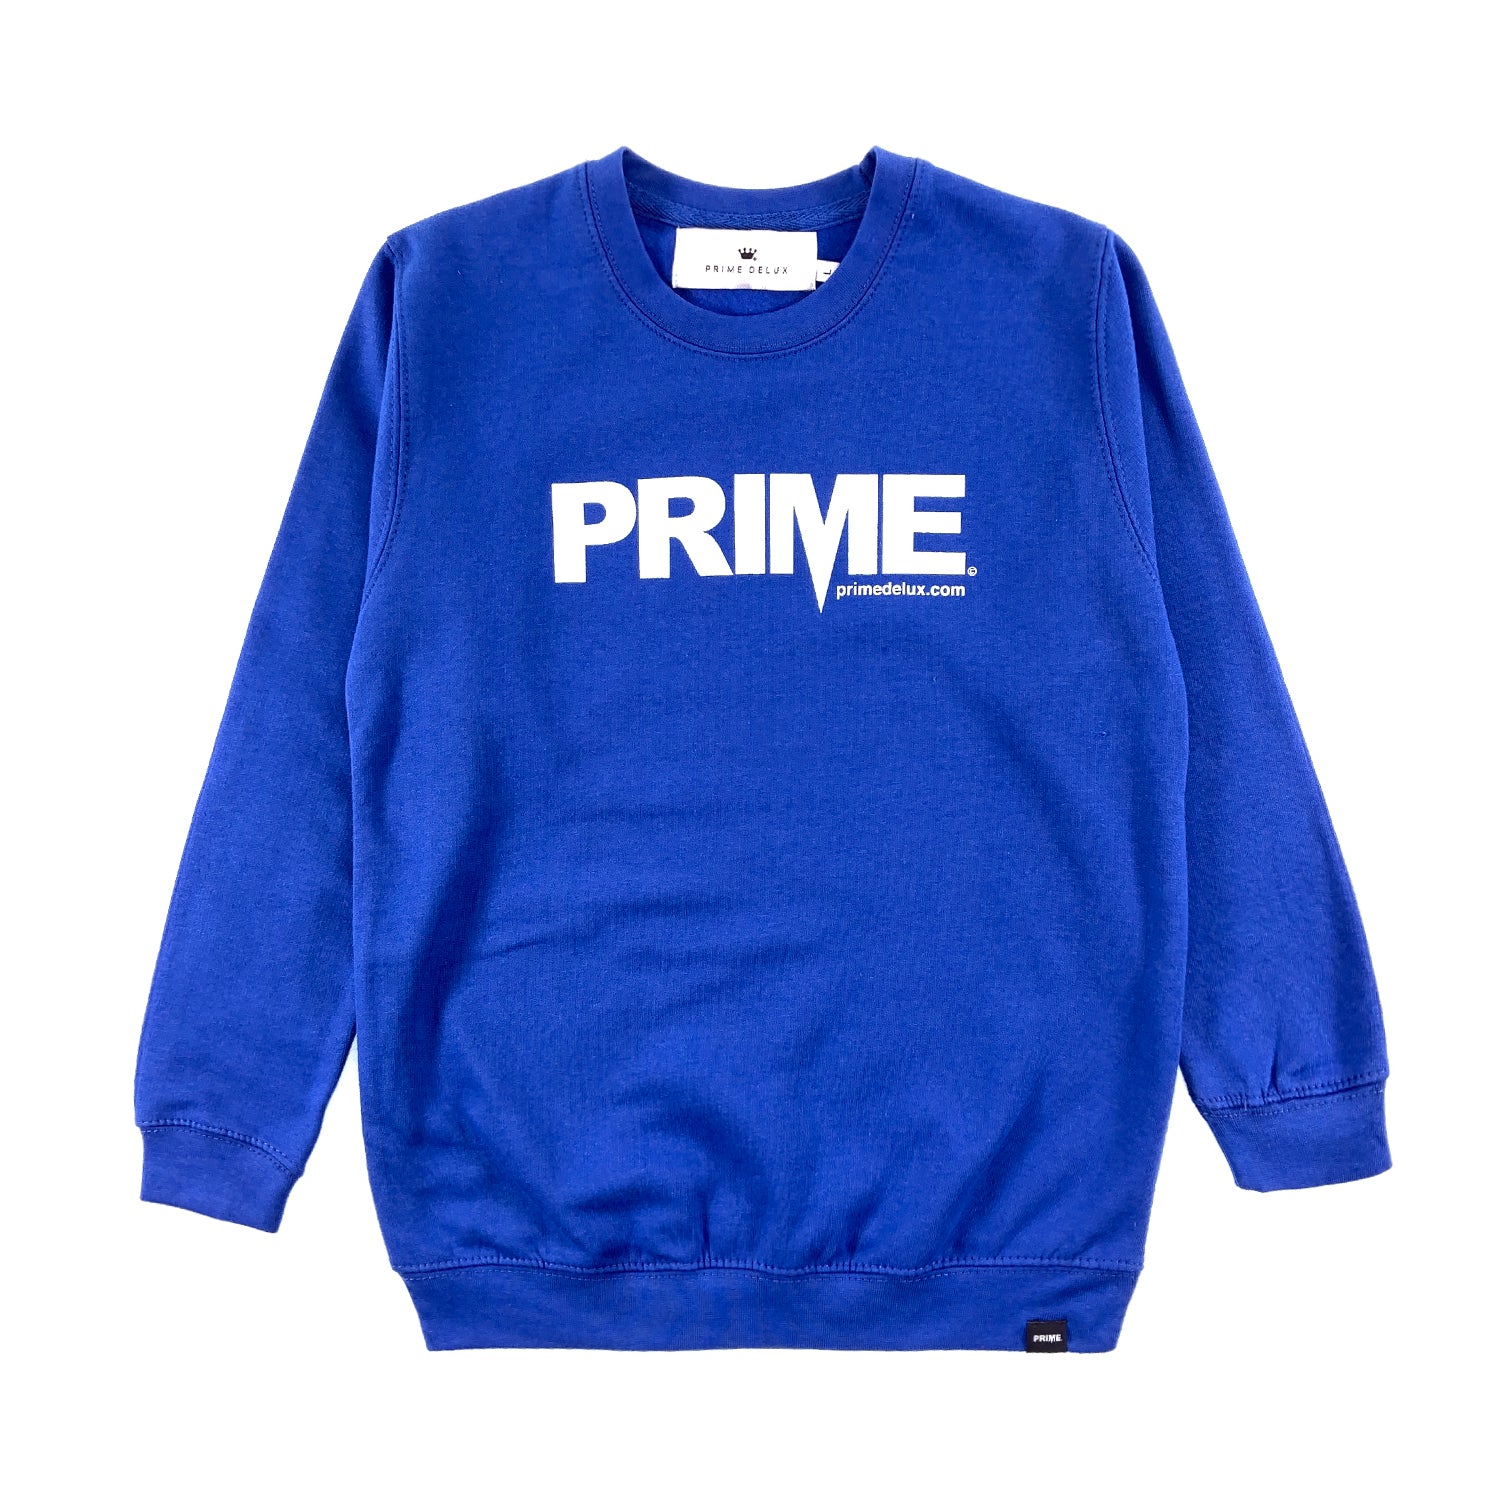 PRIME DELUX YOUTHS OG PREMIUM CREW SWEAT - ROYAL BLUE / WHITE - Prime Delux Store